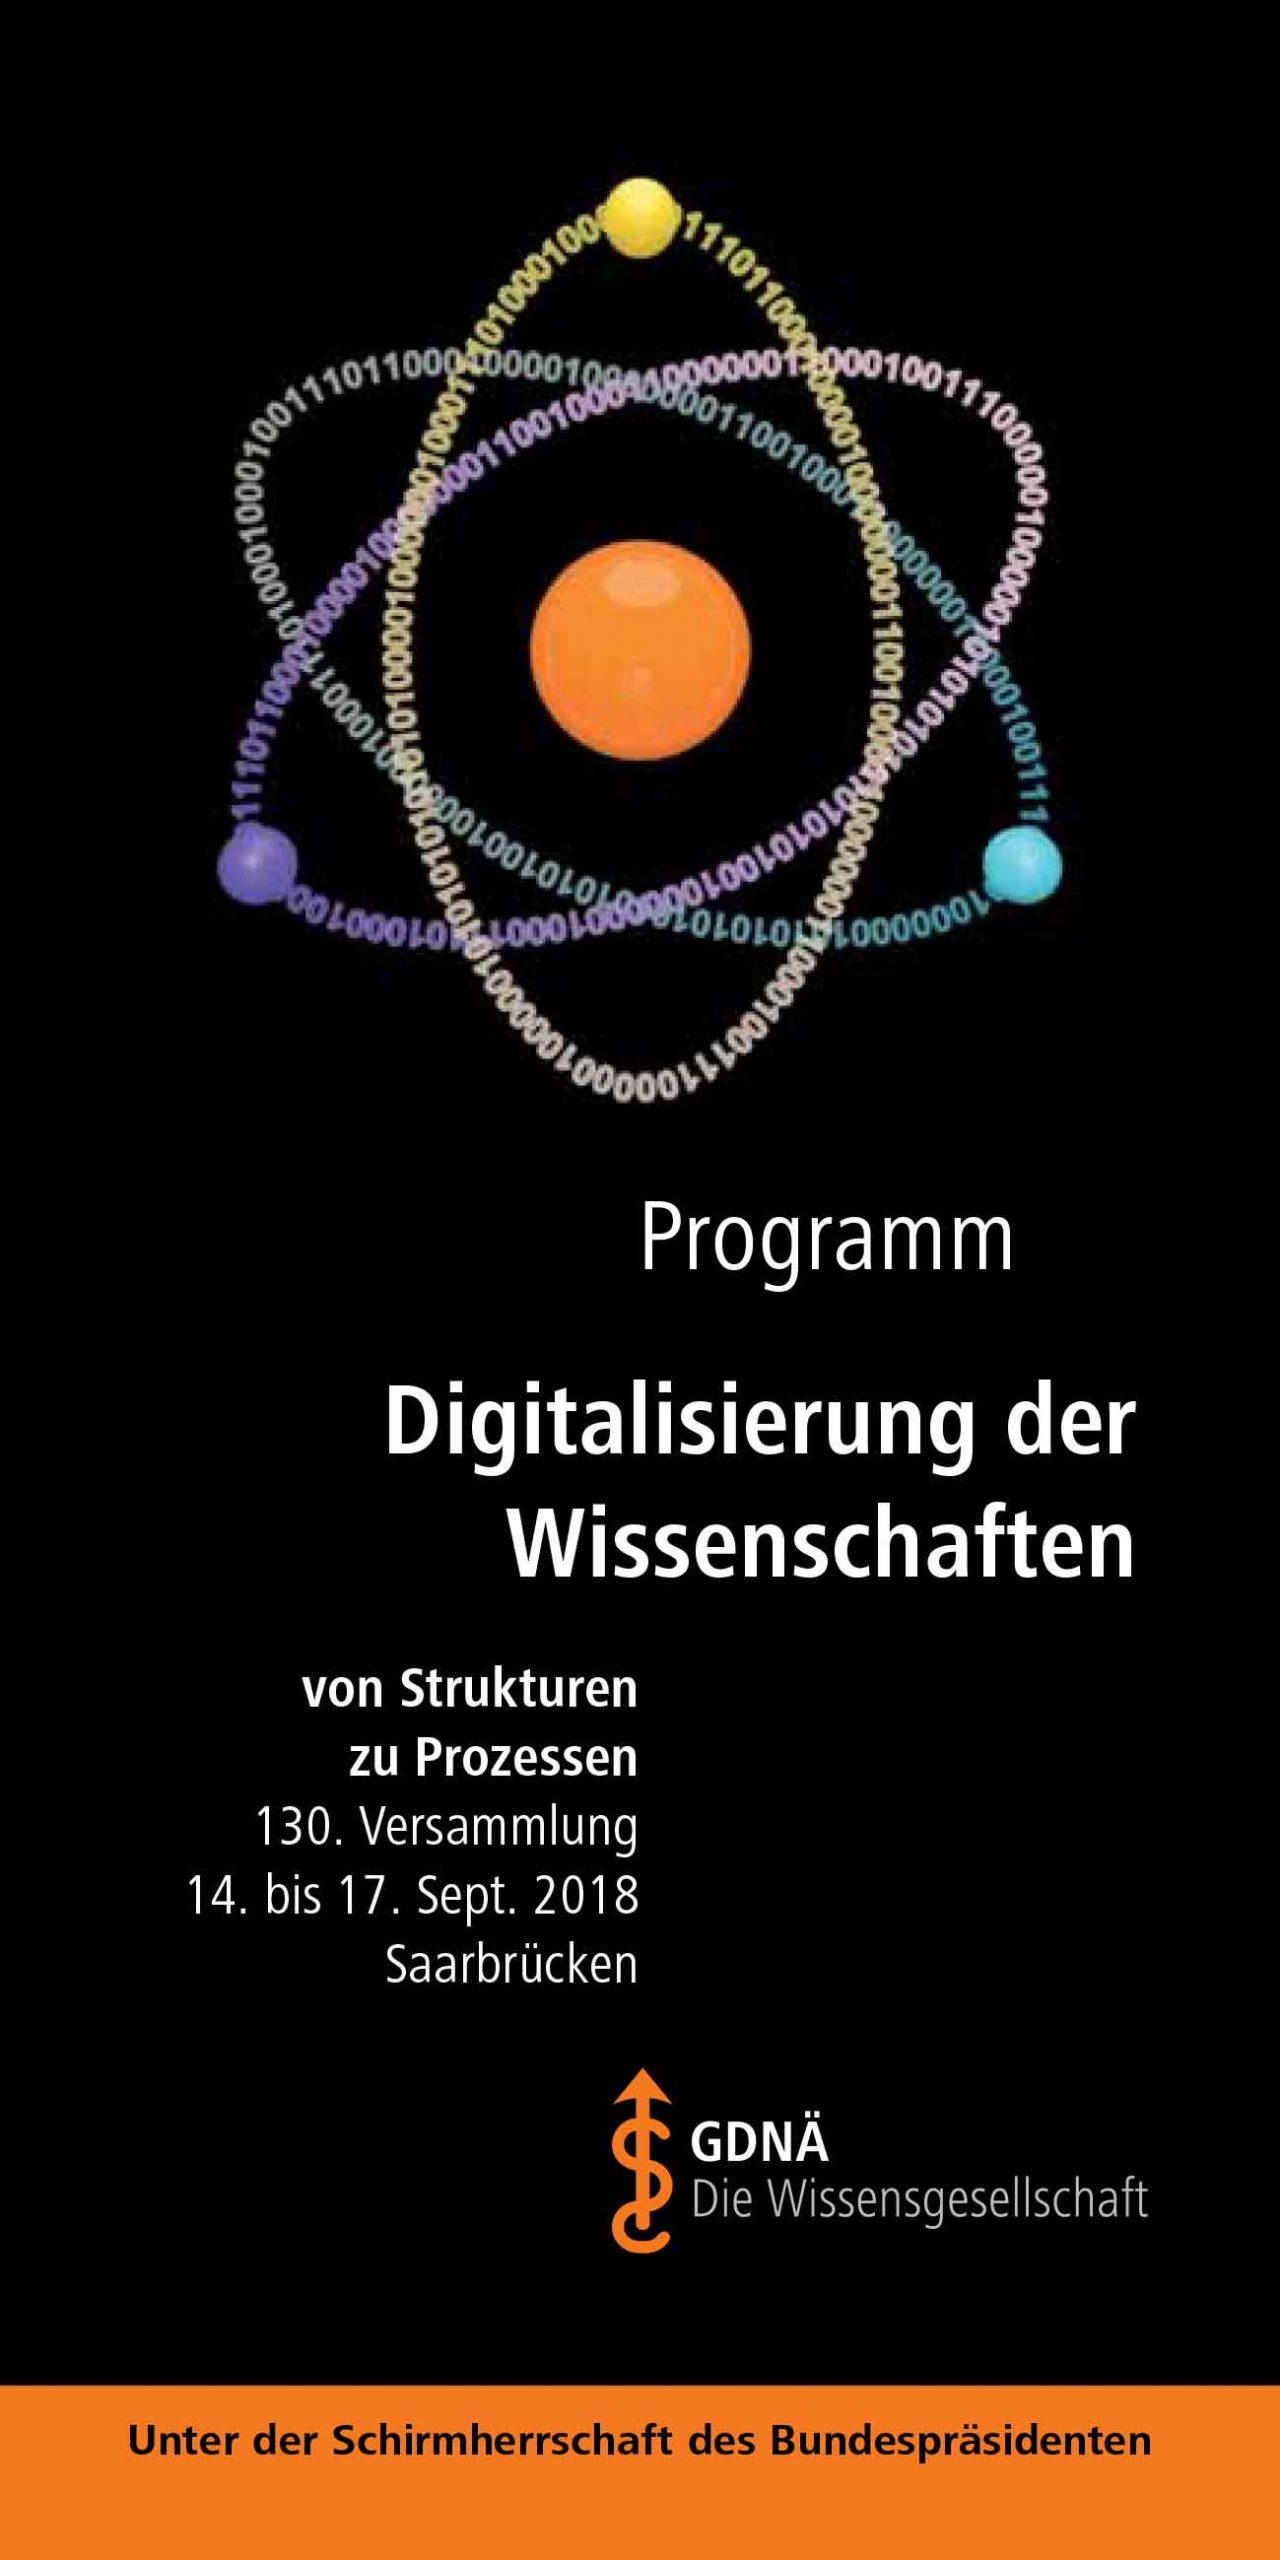 GDNAE Programm 2018 Saarbrücken 1 scaled